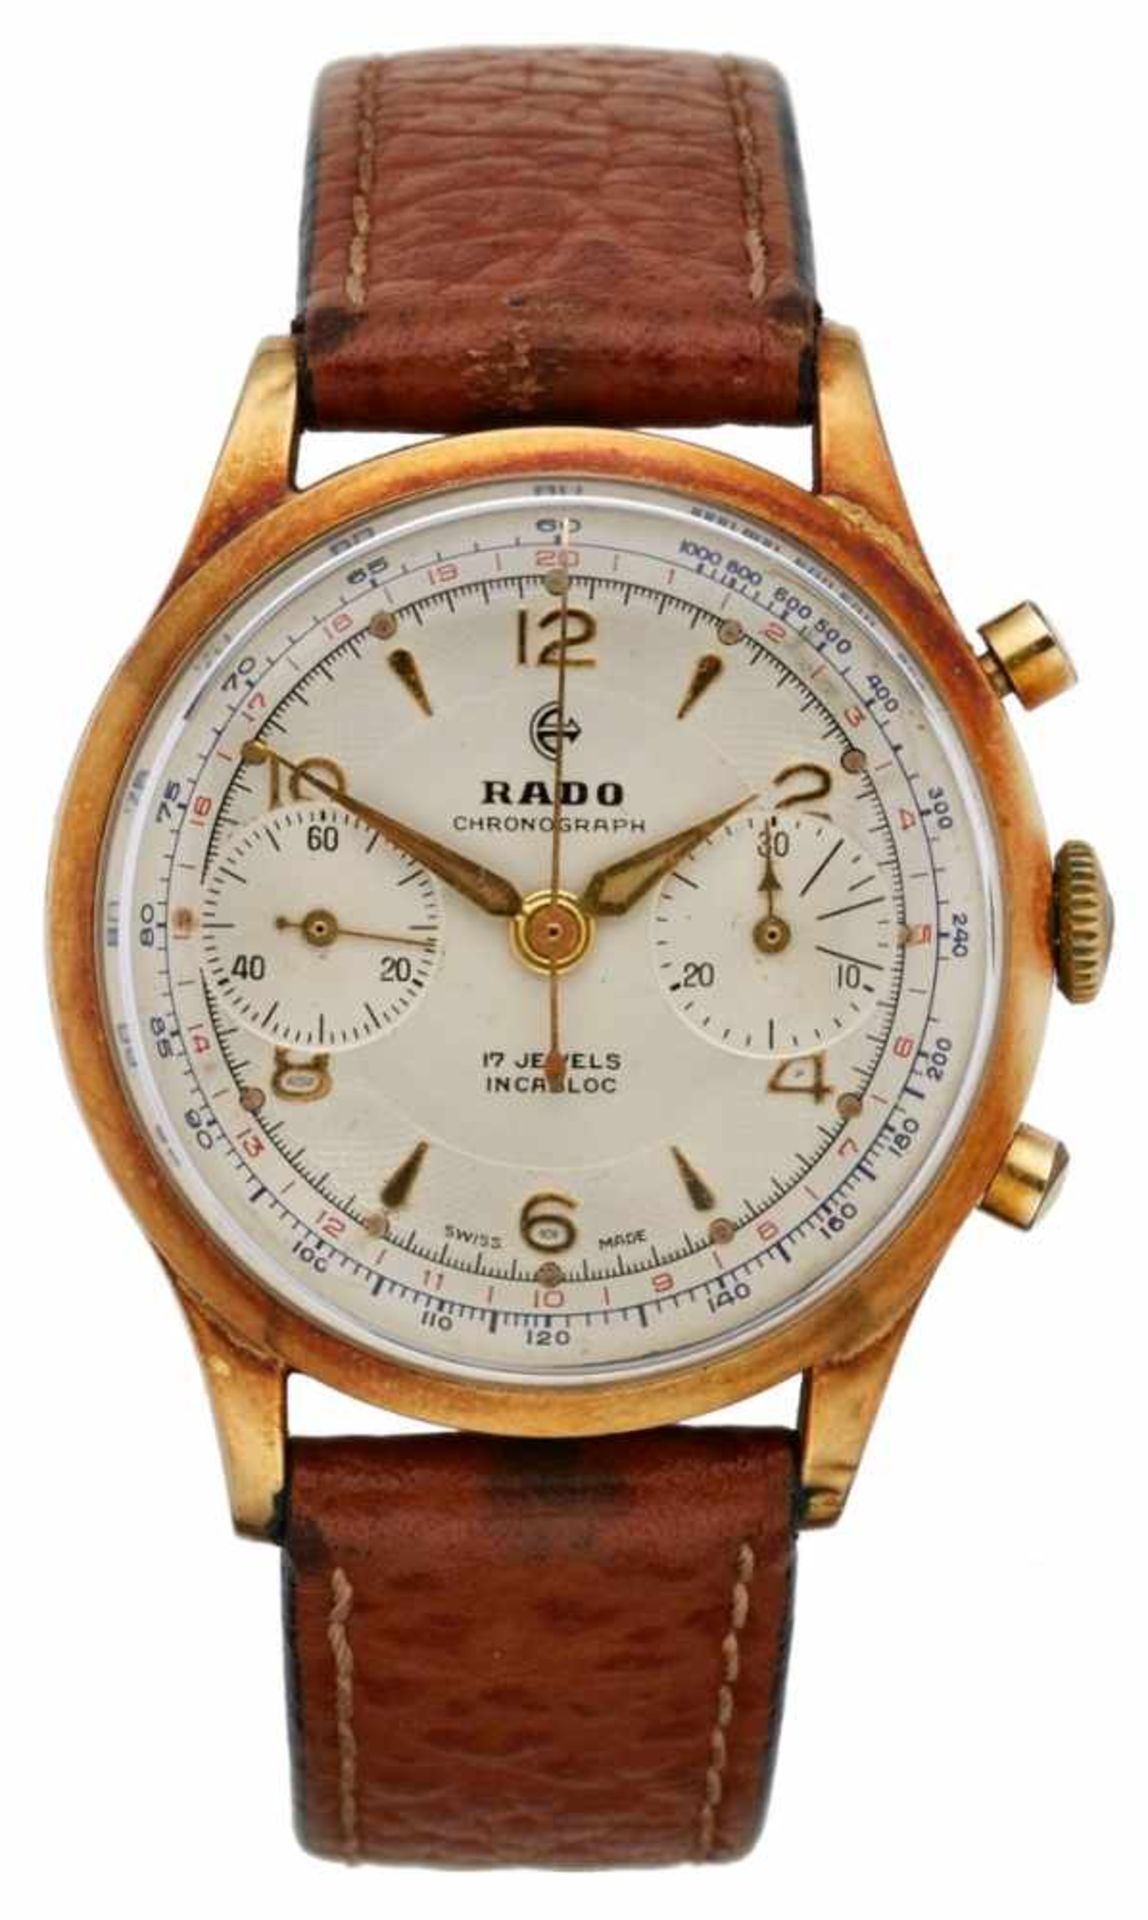 Herrenarmbanduhr/Chronograph Rado17 Jewels Incabloc, Schweiz um 1960. 14kt GG-Gehäuse, Handaufzug,